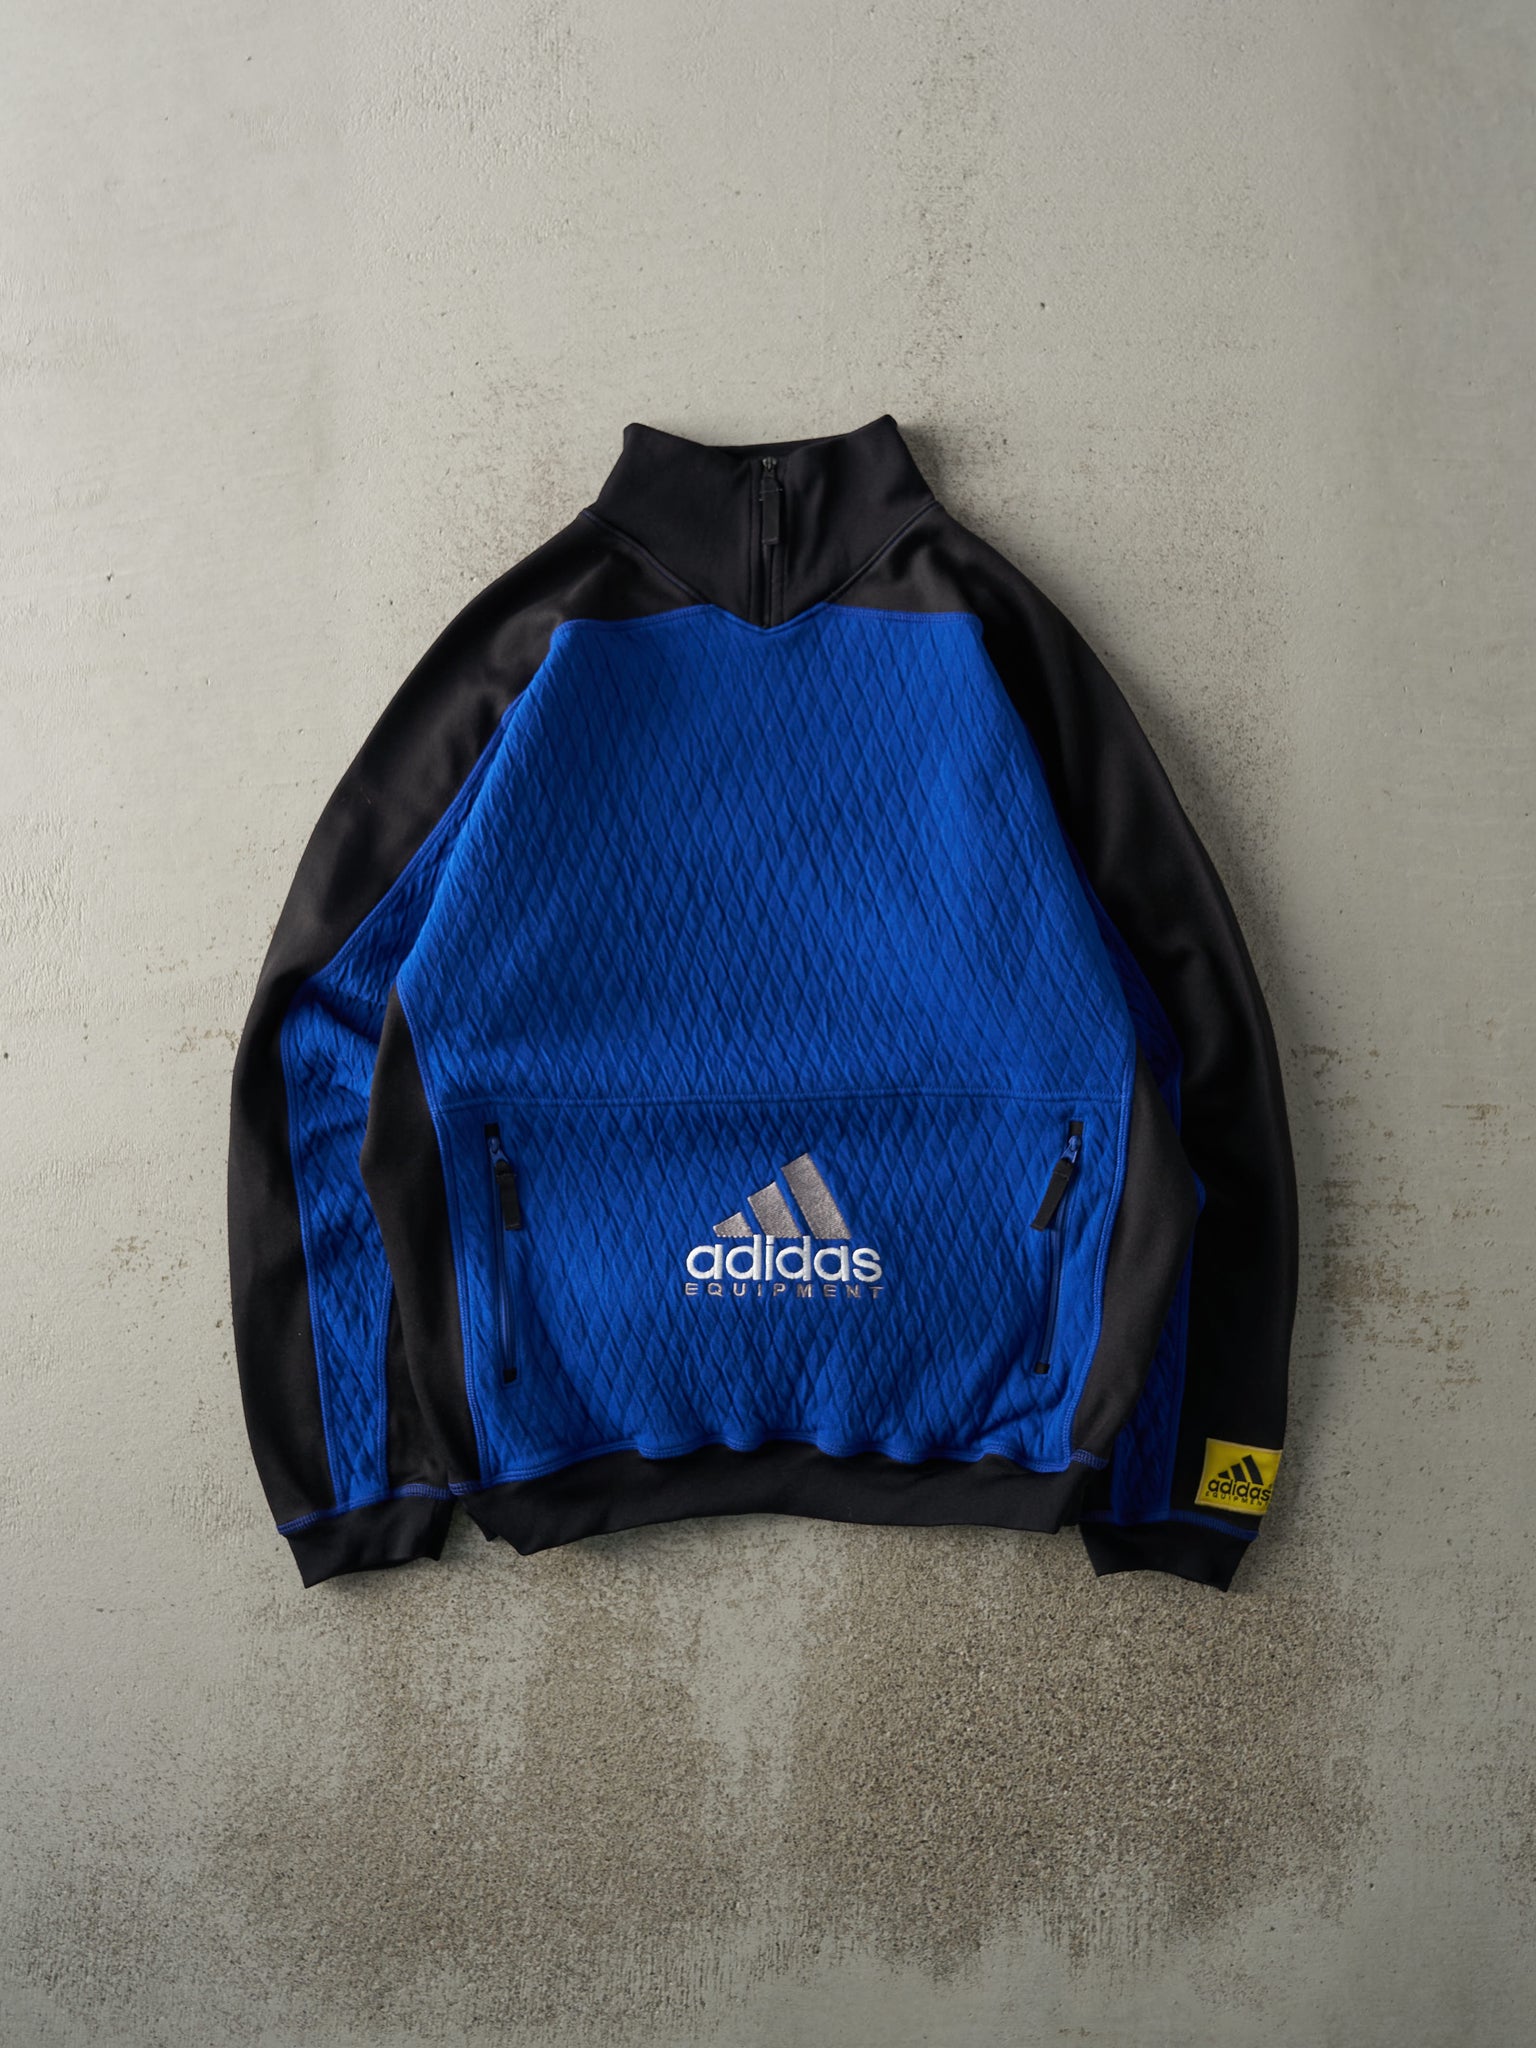 Vintage 90s Blue & Black Adidas Equipment Sweatshirt (M/L)